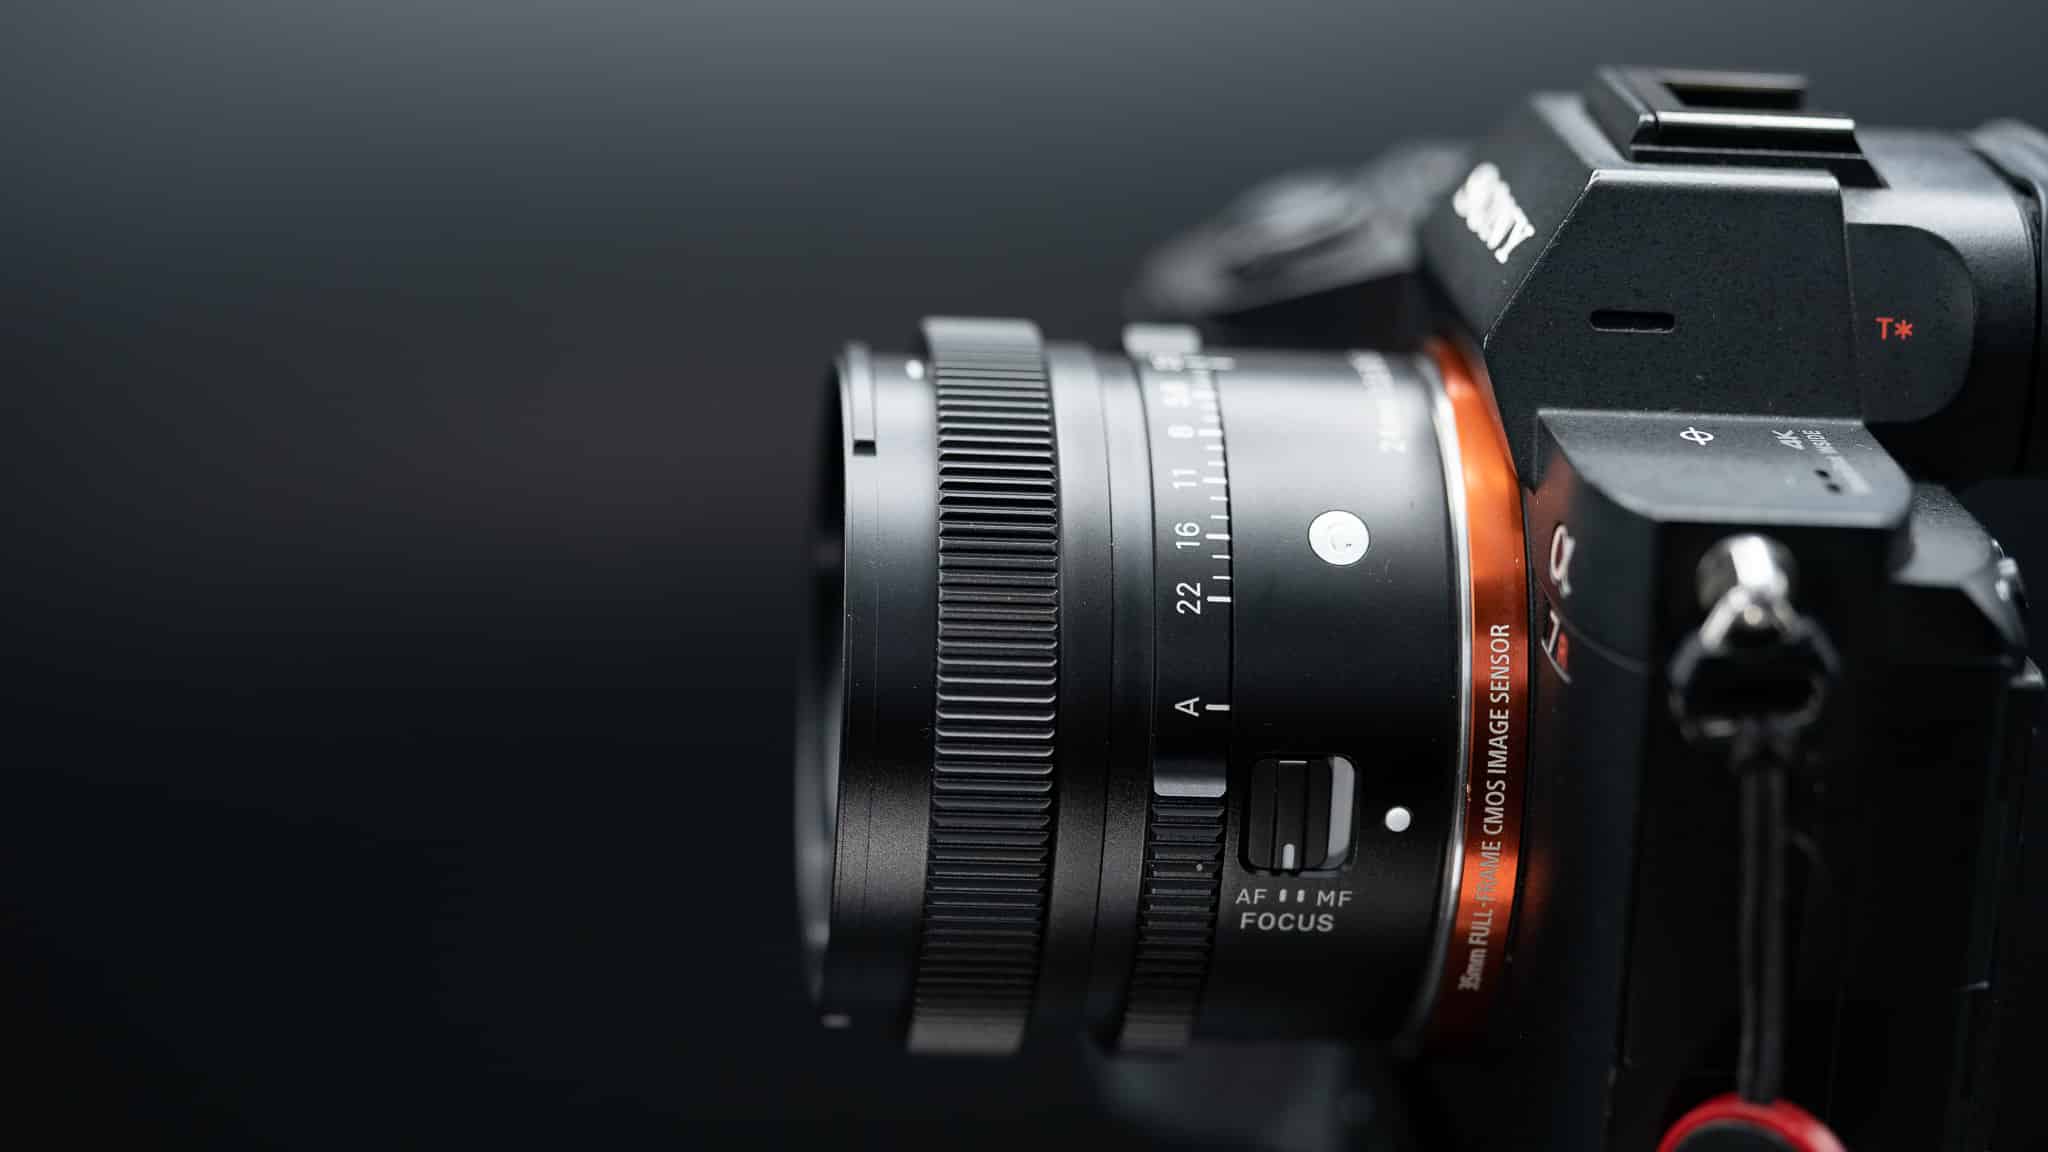 Ống kính Sigma 24mm F3.5 DG DN Contemporary cho Sony E